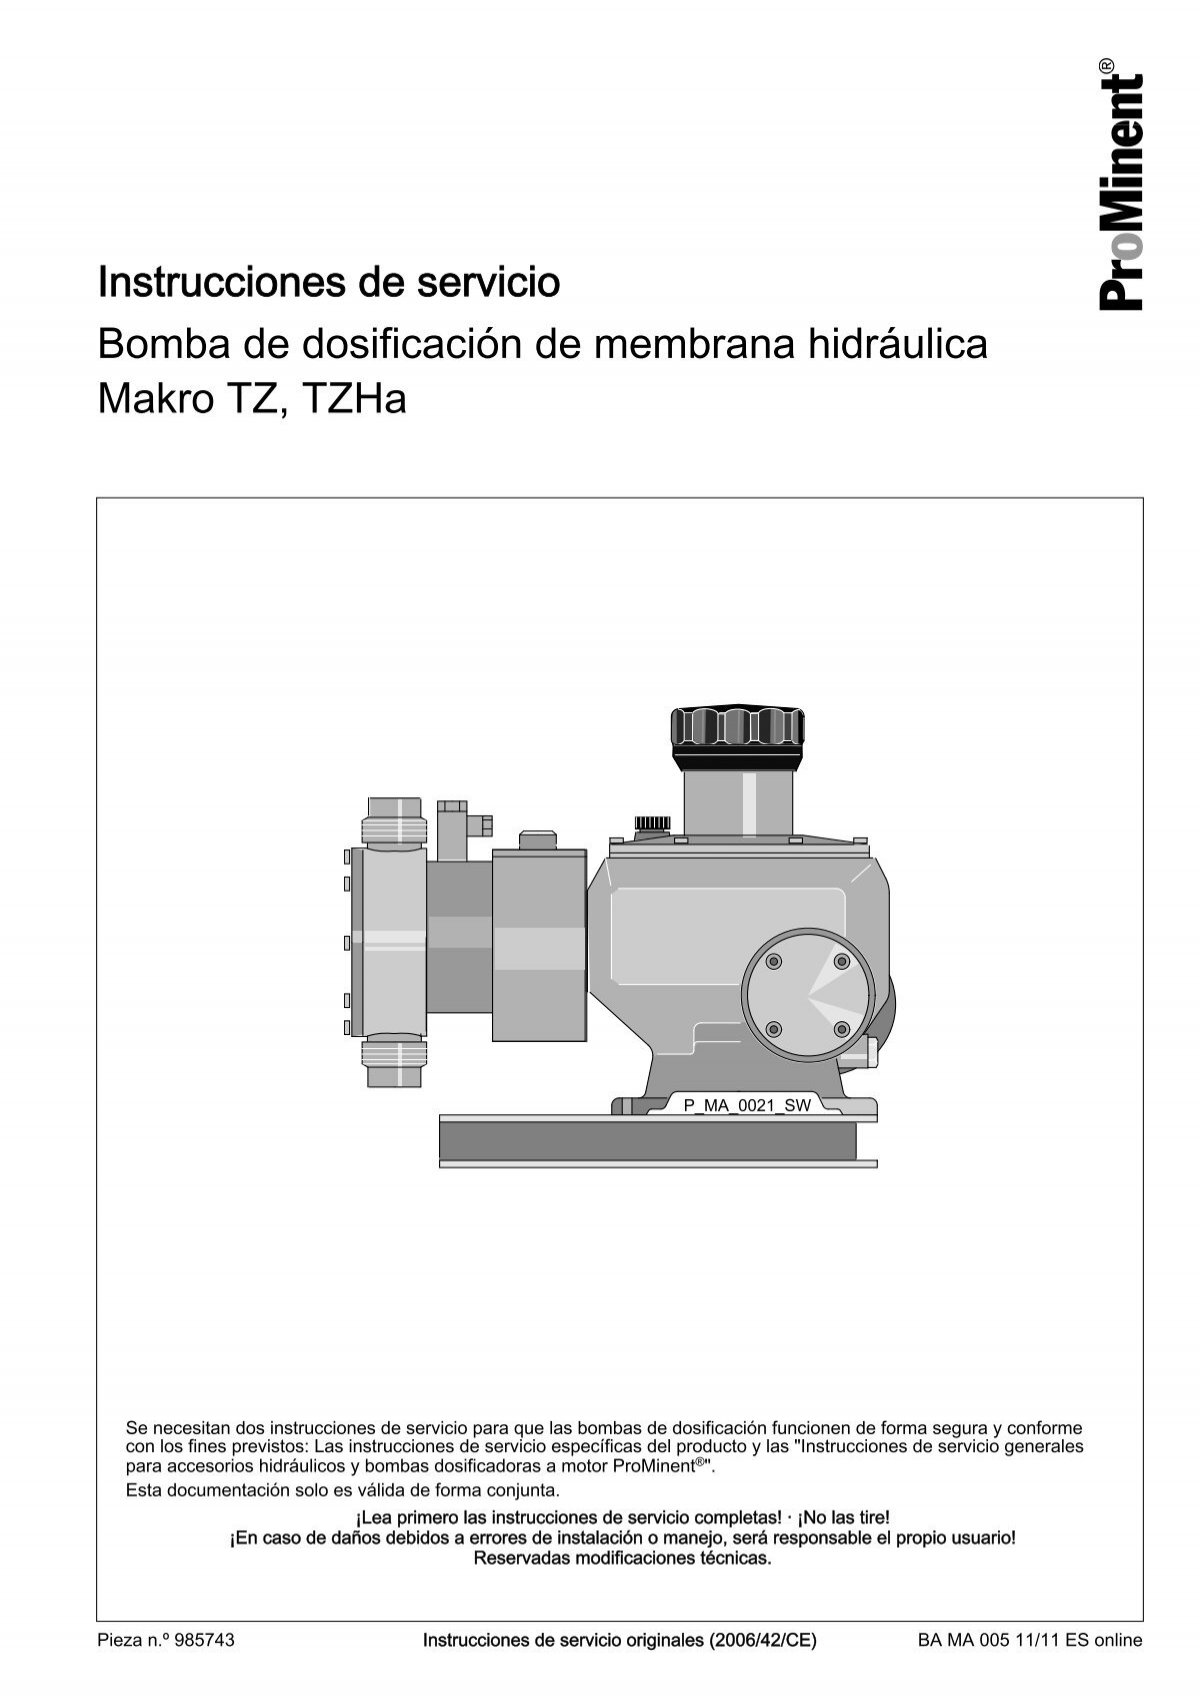 Hydraulic diaphragm metering pump - Makro TZ TZHa - ProMinent